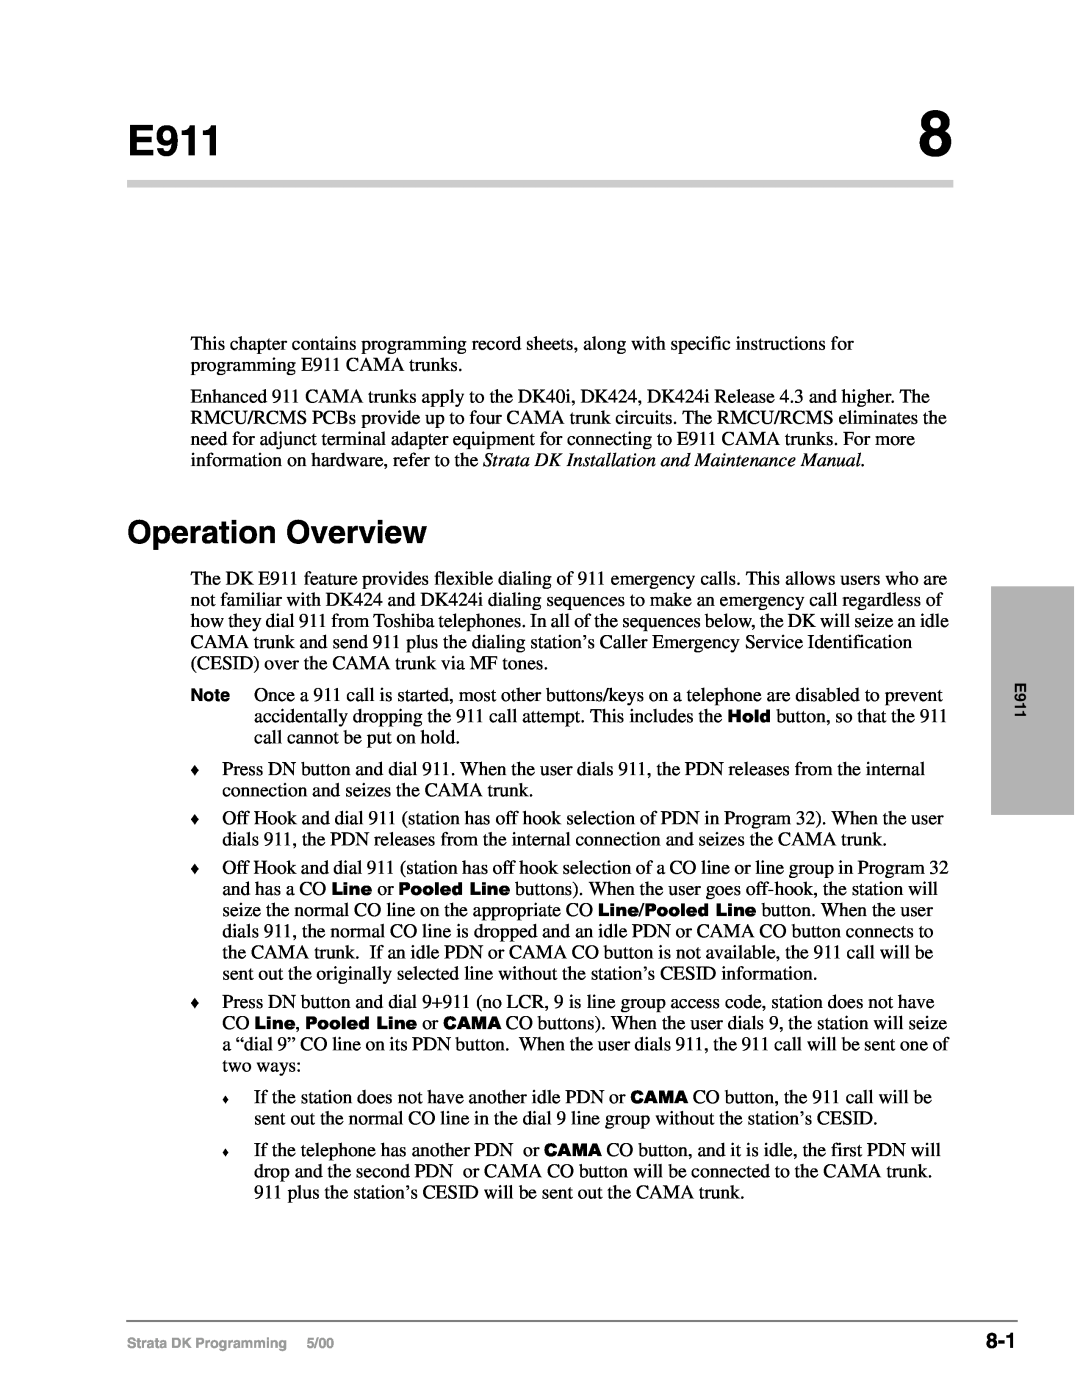 Toshiba dk14, DK40I, DK424I manual E911, Operation Overview 